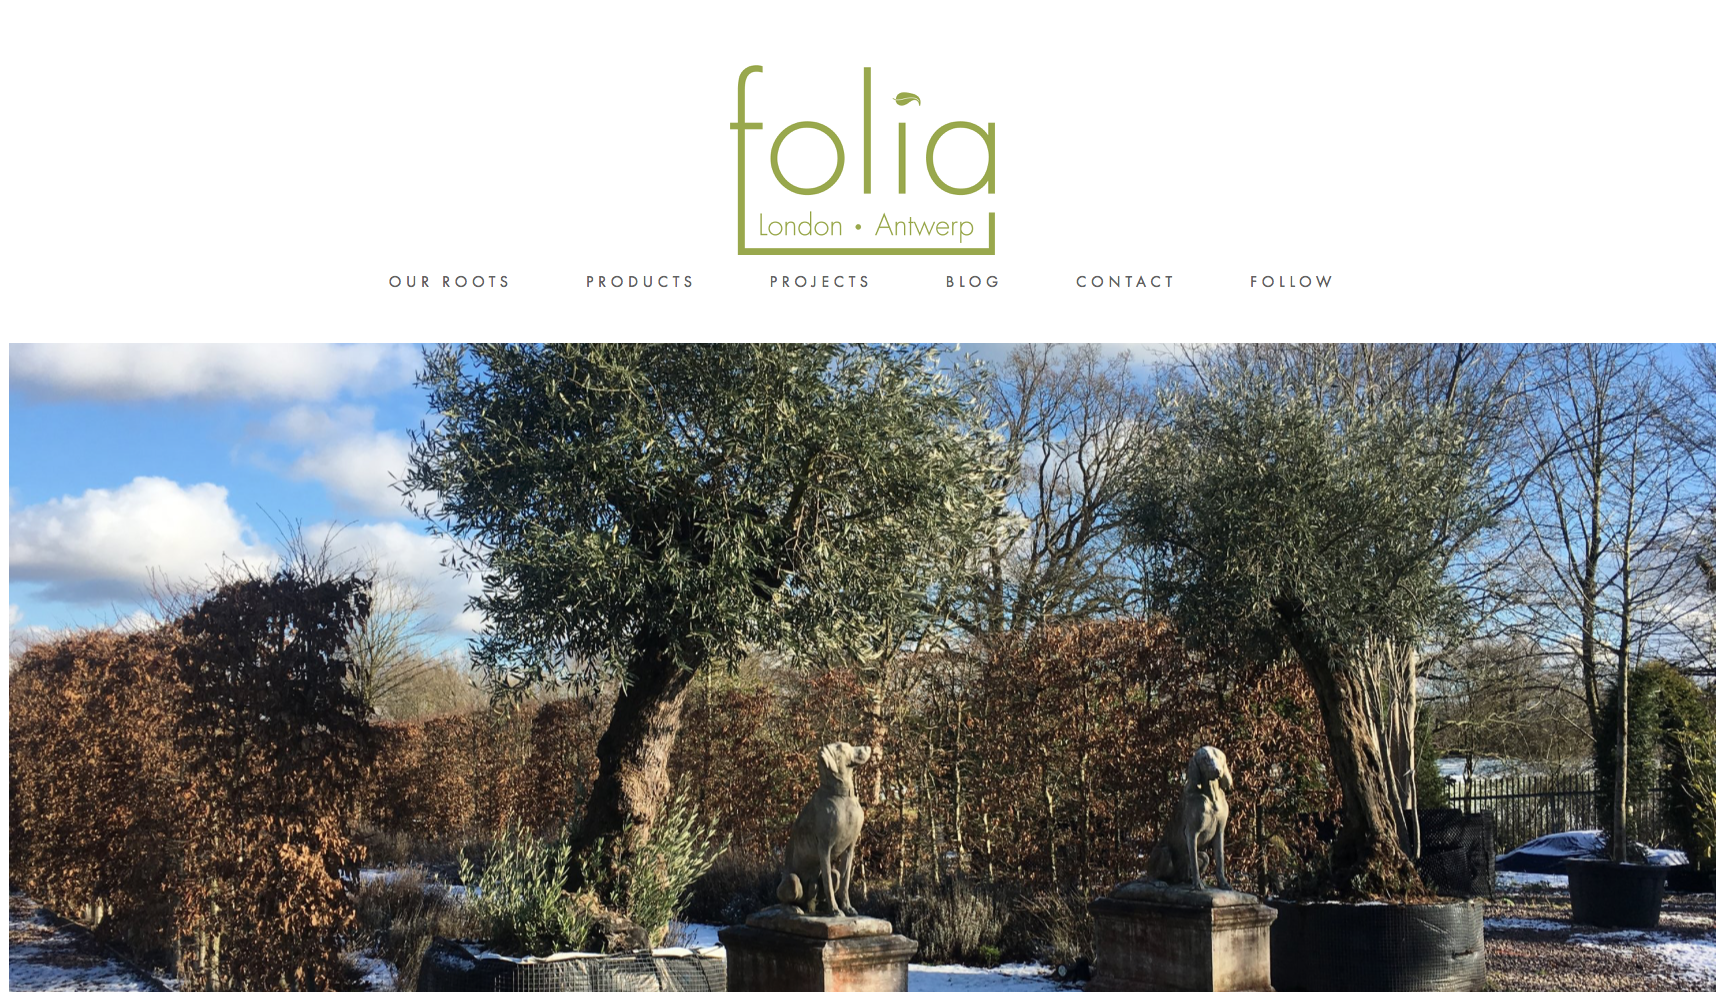 www.folia-europe.com (redesigned in 2022)